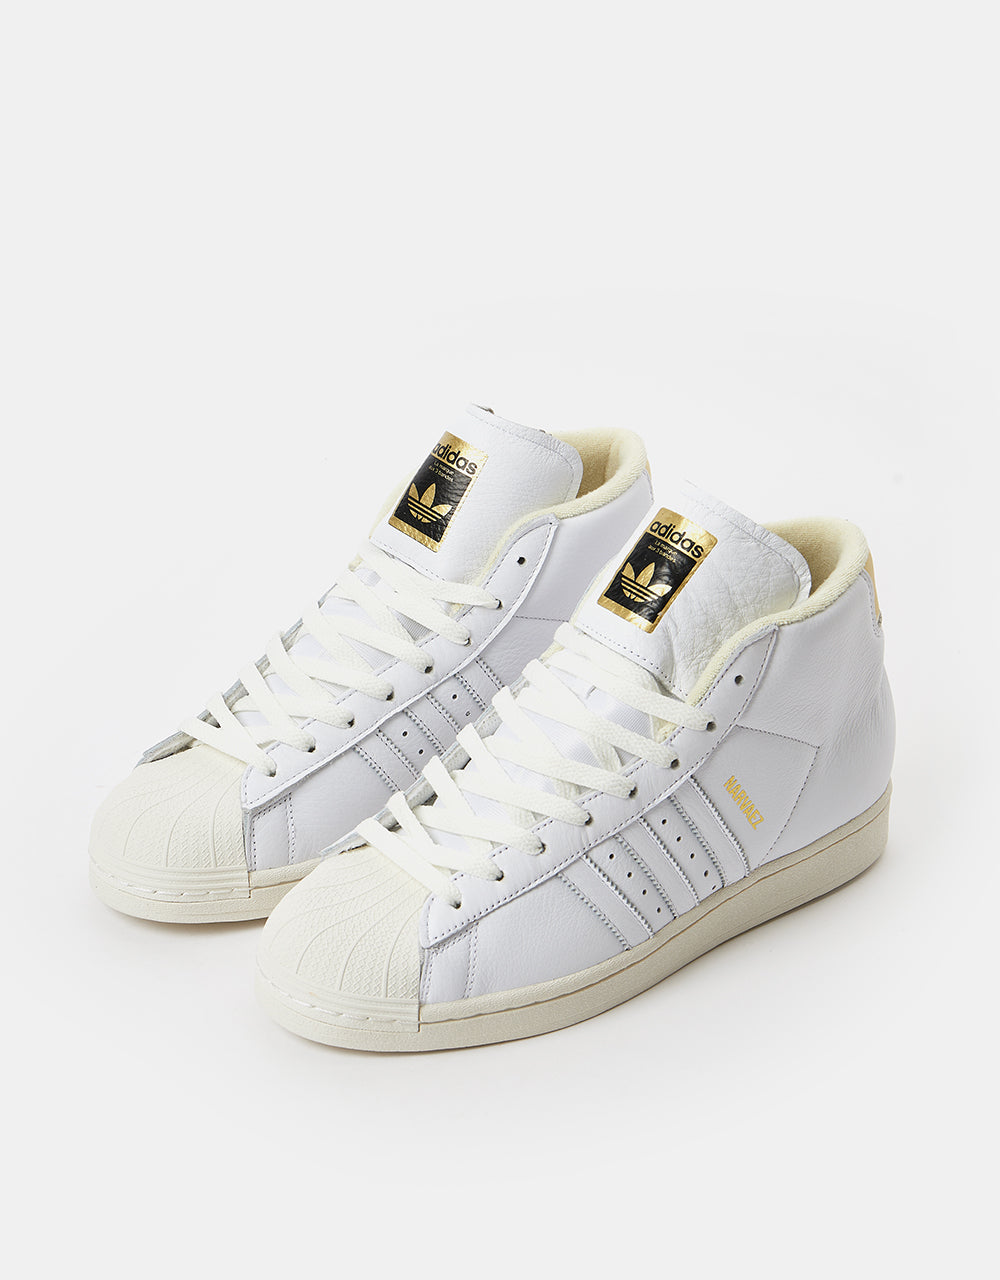 adidas x Sam Narvaez Pro Model ADV Skate Shoes - White/White/Easy Yellow